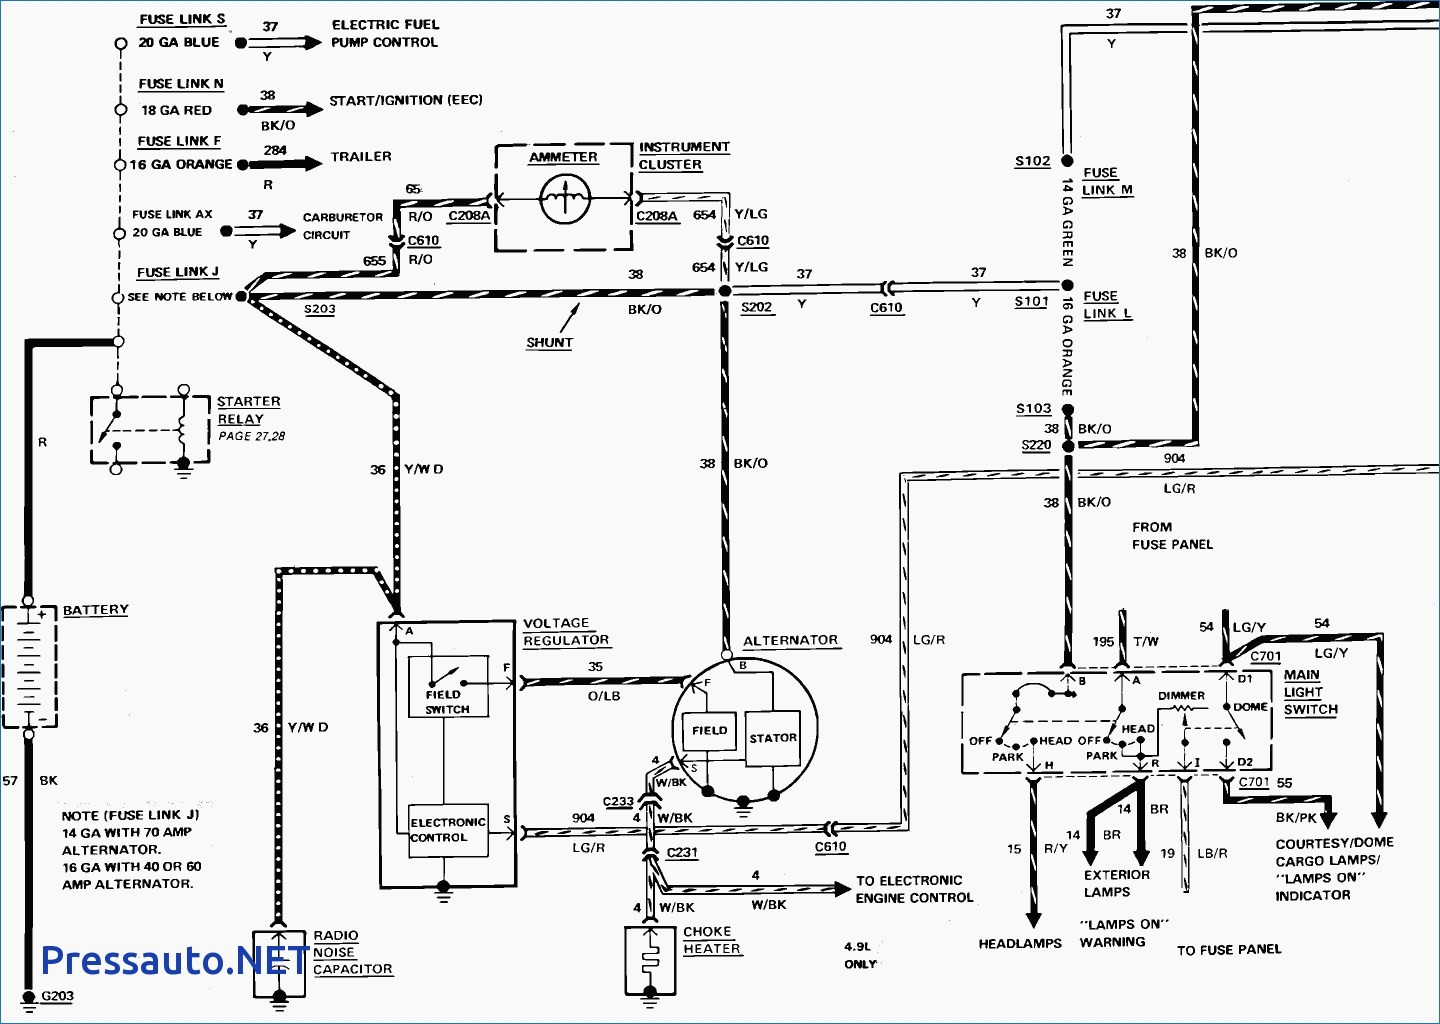 Ford Alternator Wiring Diagram Internal Regulator WIRING DIAGRAM Throughout For With